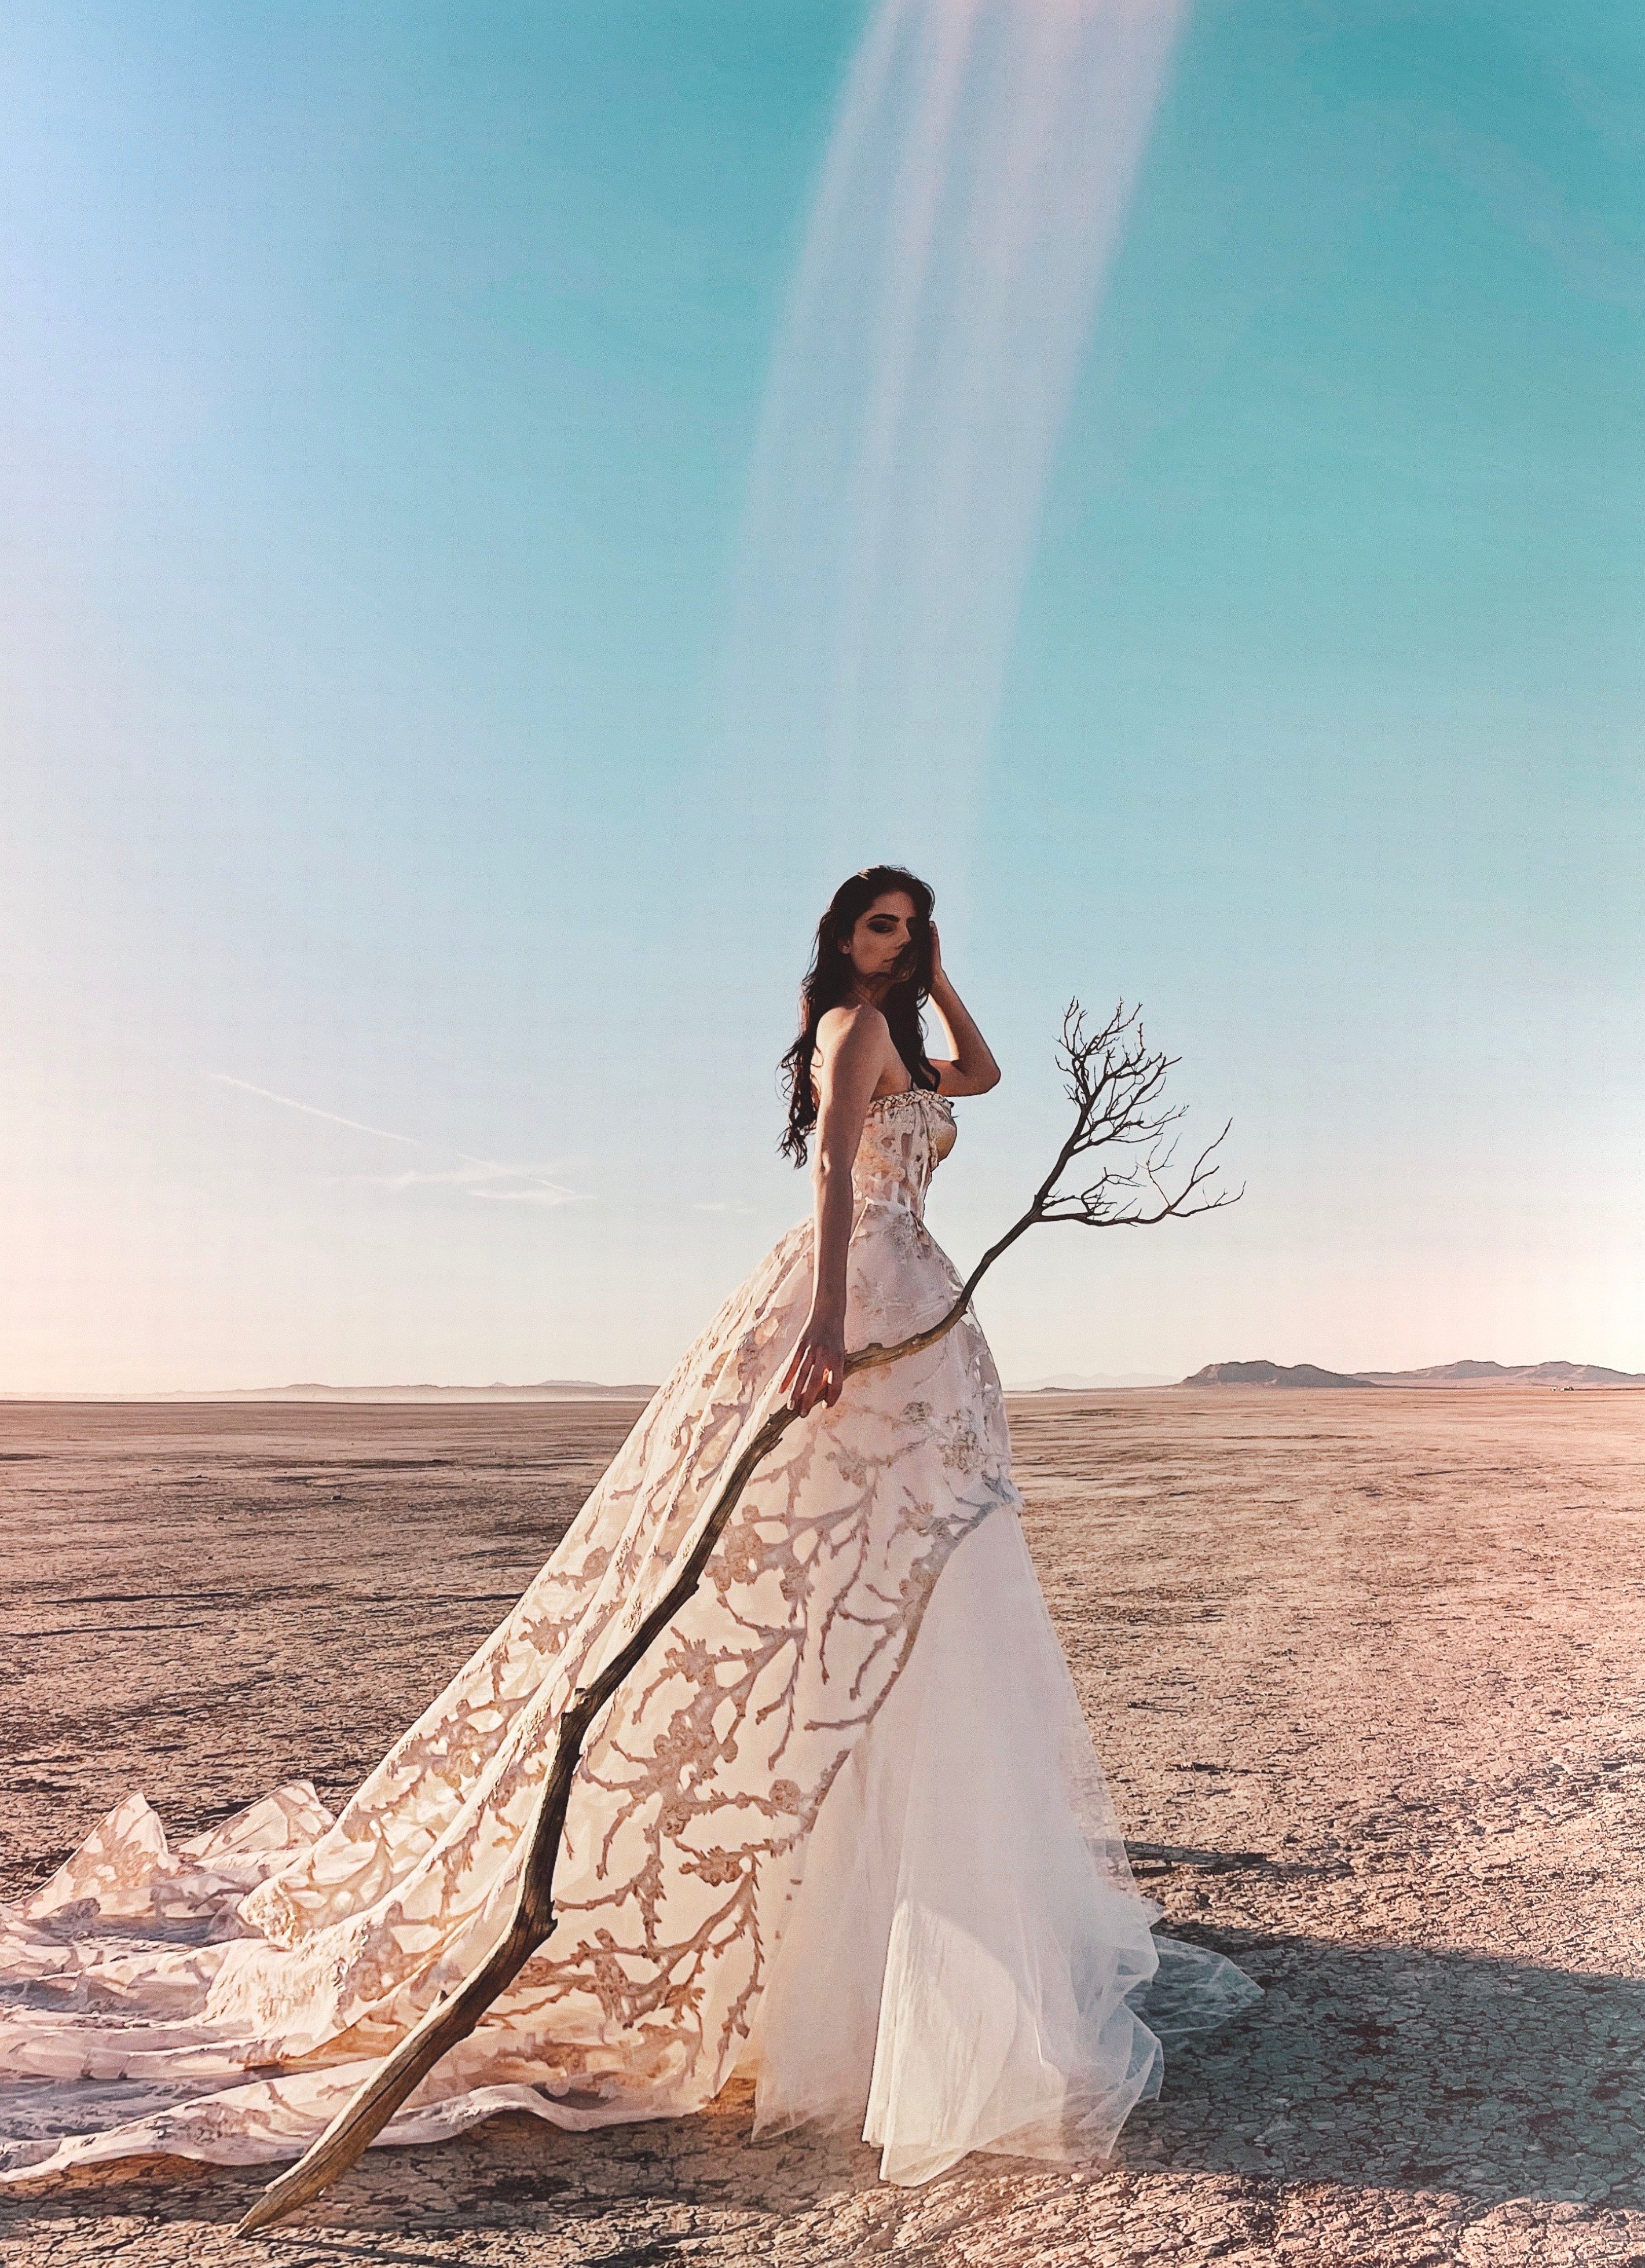 Sagittarius wedding dress shot in desert holding stick